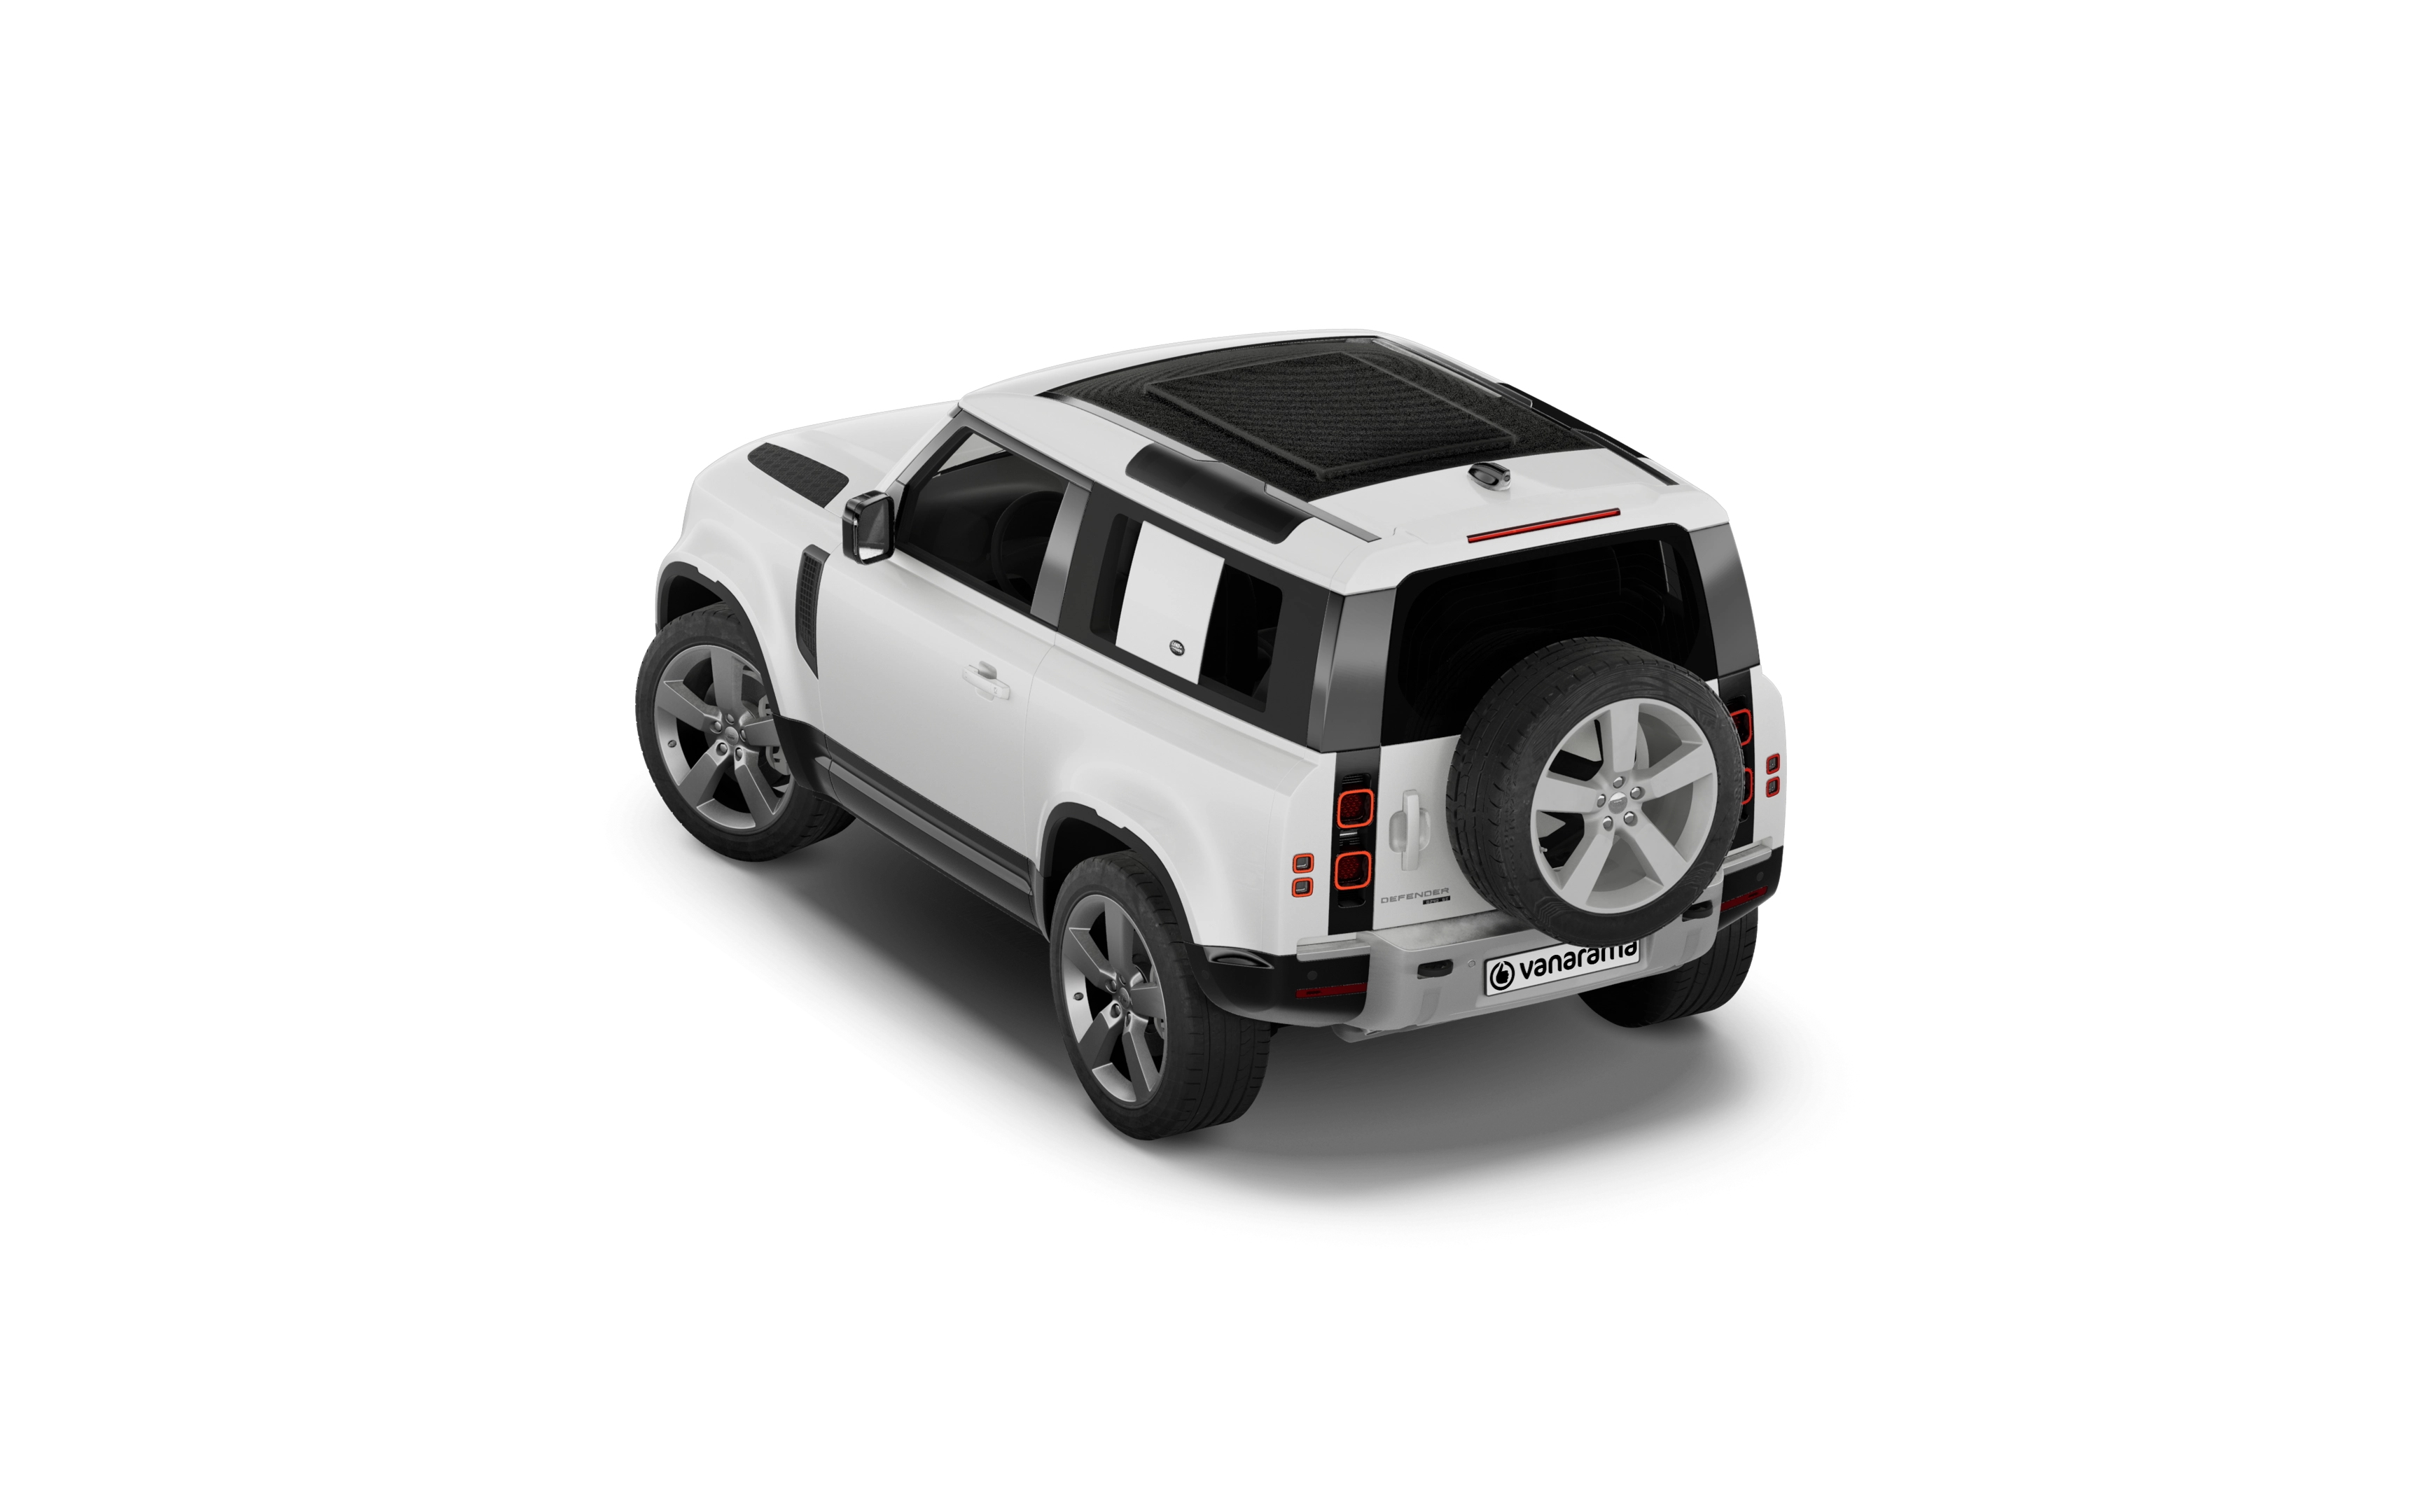 Land rover defender estate 3.0 d250 x-dynamic hse 90 3 doors auto [6 seat]